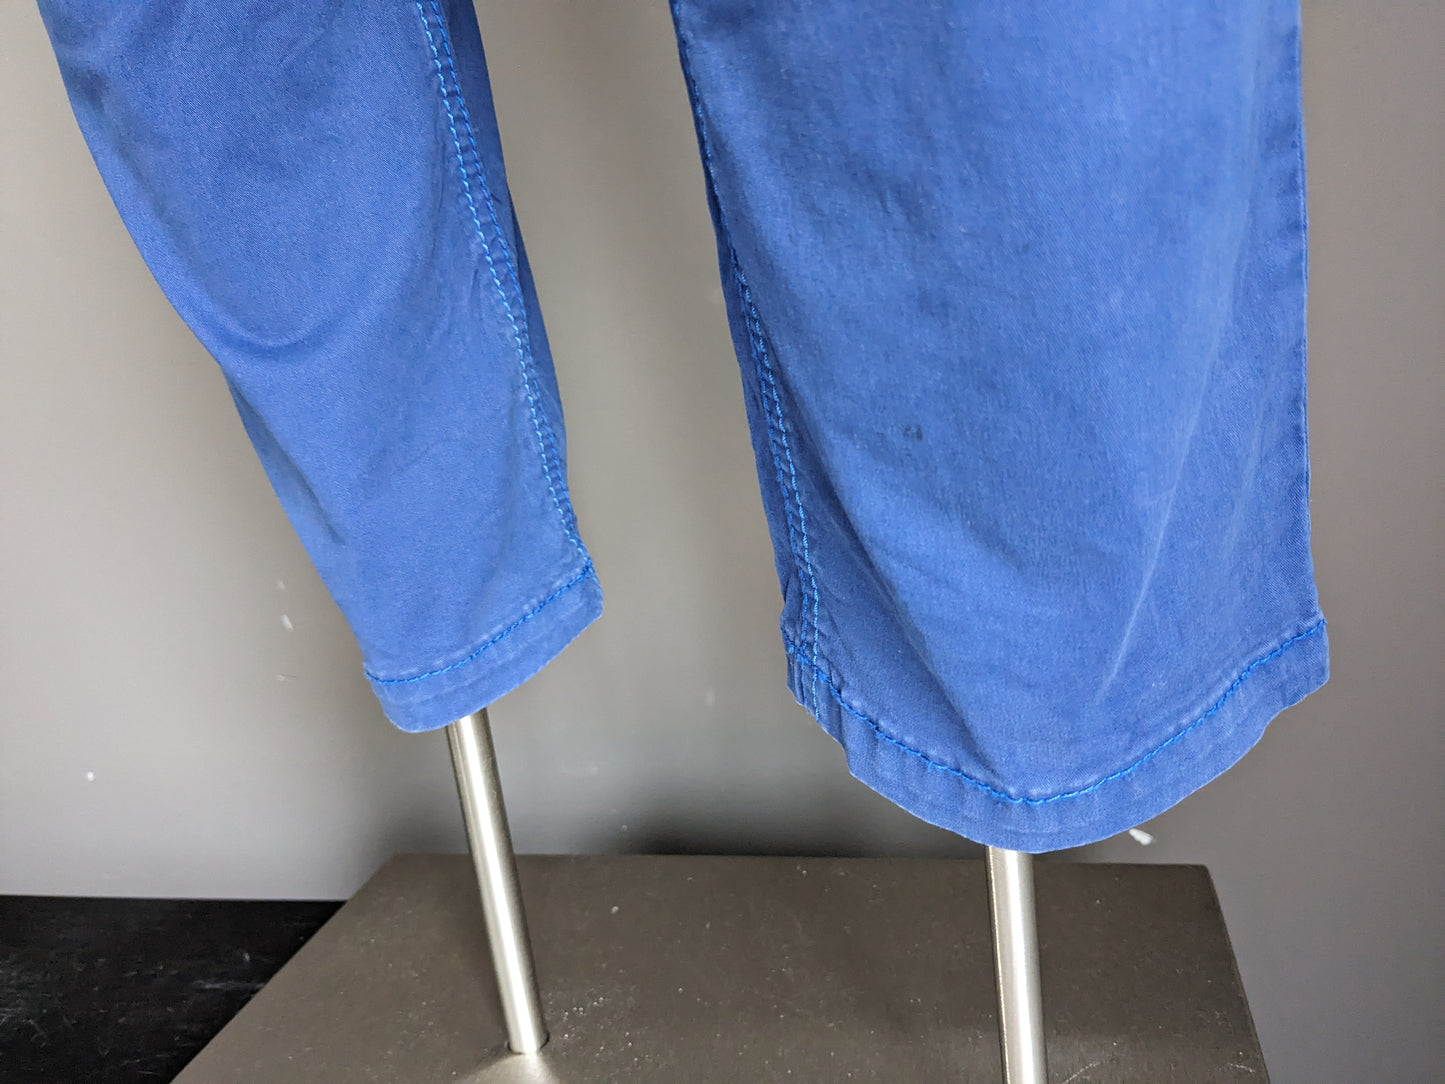 Bartlett pants / trousers. Blue. Size 24 (48) / M